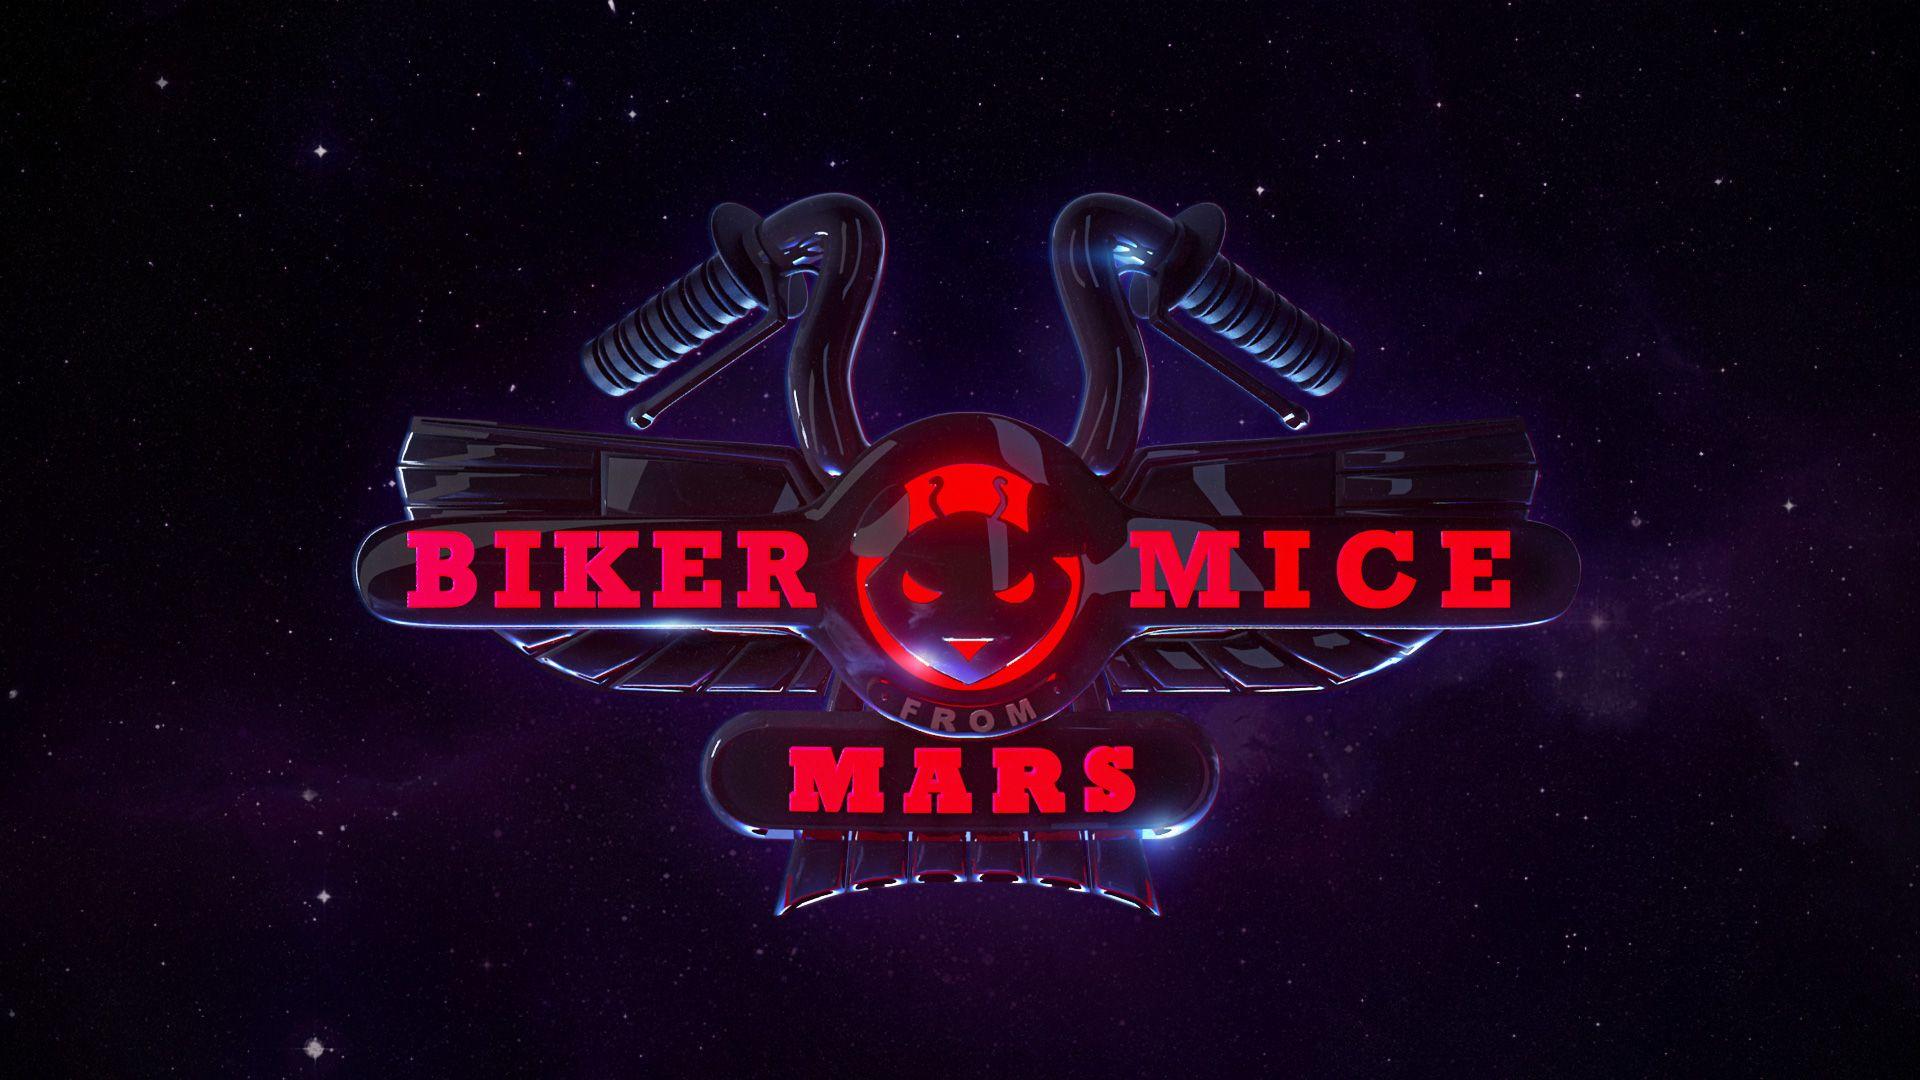 Mice Logo - I made my own 3D version of the Biker Mice logo!